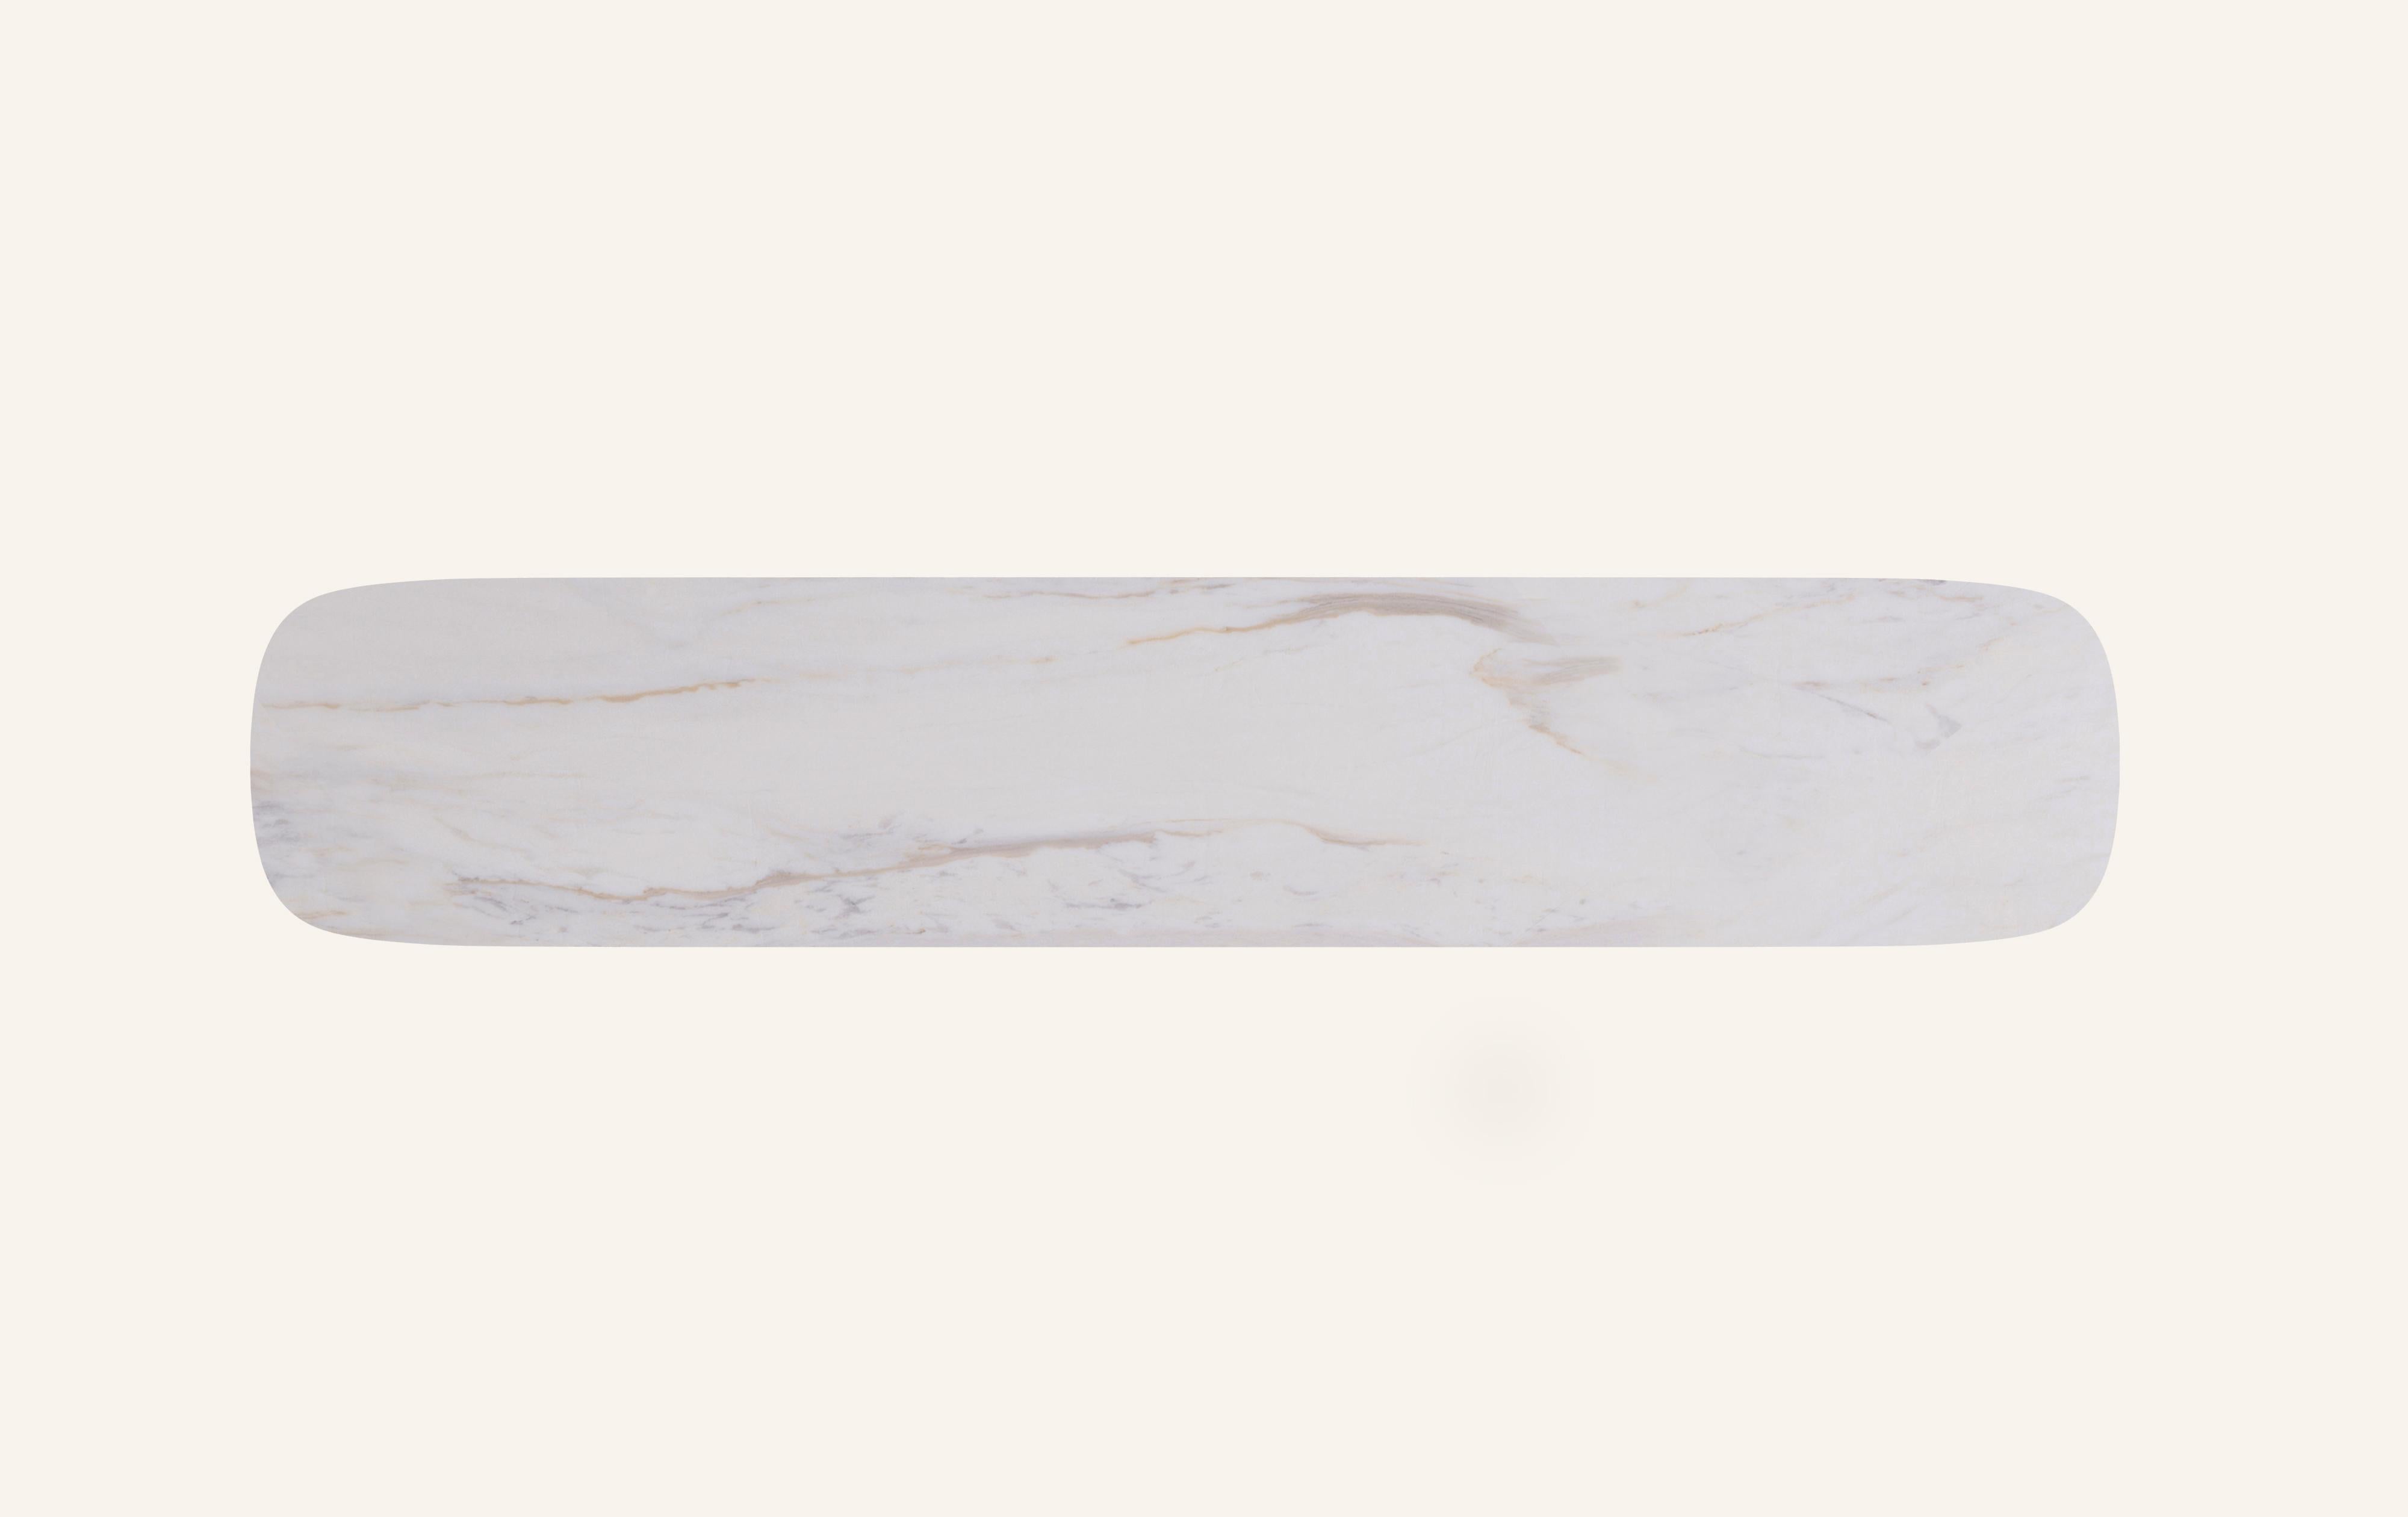 FORM(LA) Cono Console Table 72”L x 15”W x 33”H Volakas White Marble In New Condition For Sale In Los Angeles, CA